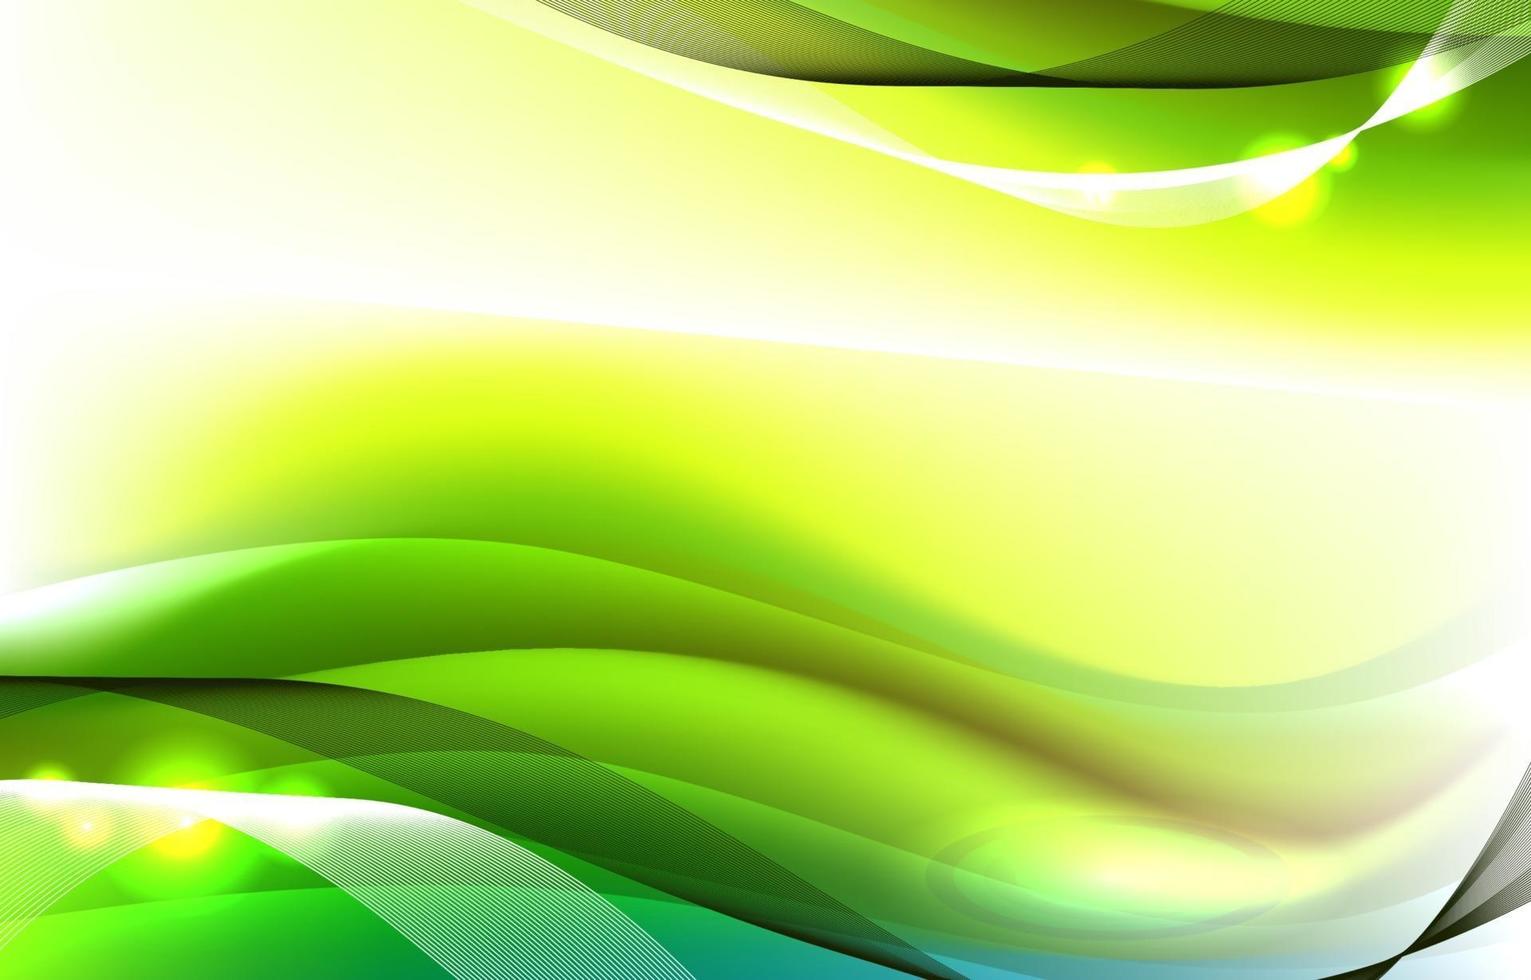 abstracte moderne groene achtergrond vector